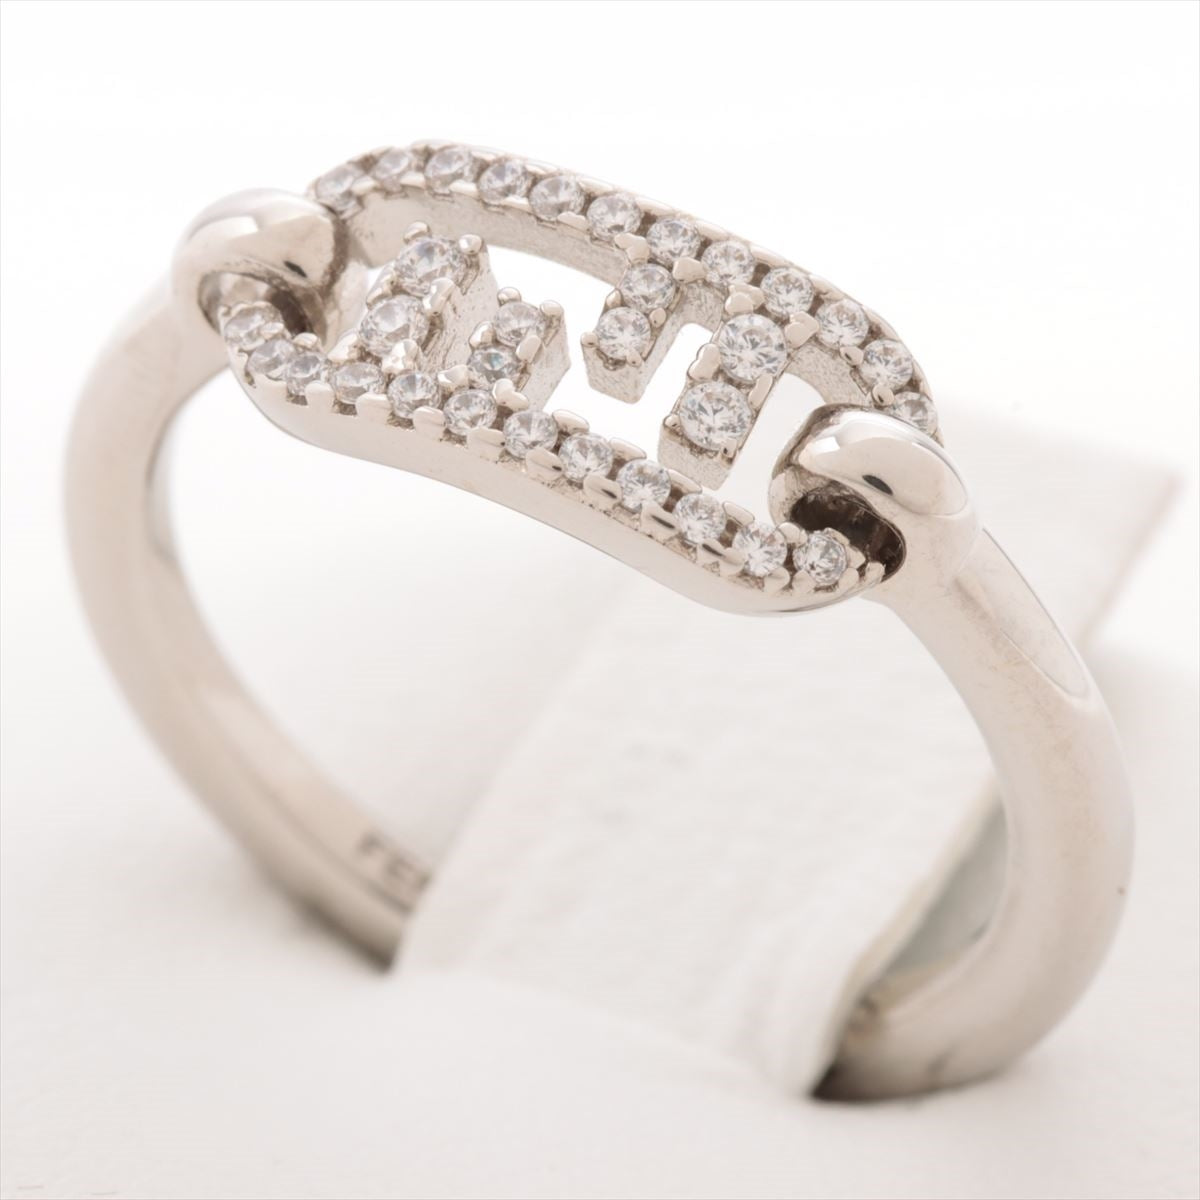 Fendi Auroc rings S GP×inestone Silver